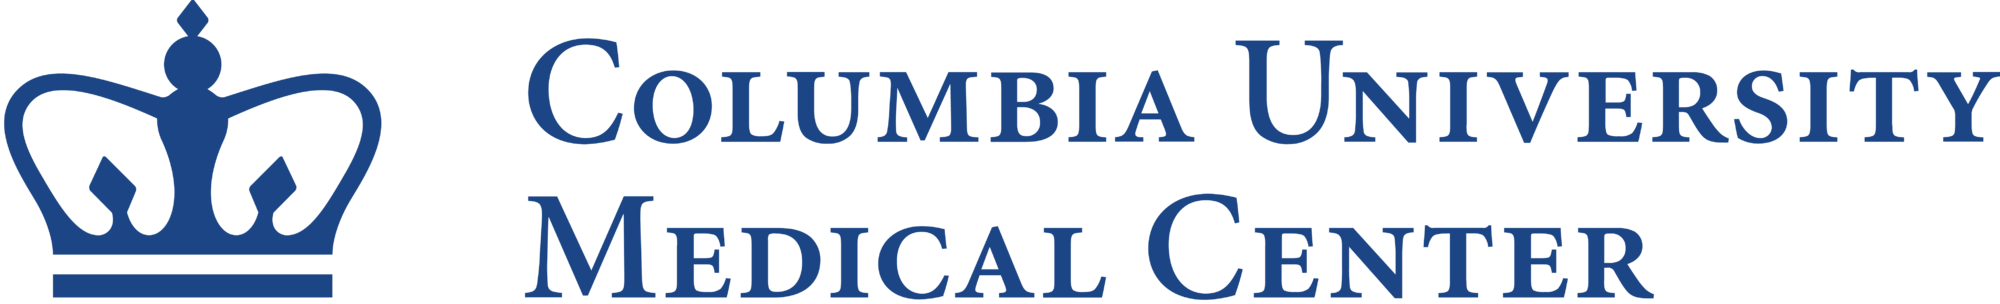 Columbia University - Department of Dermatology, New York, NY